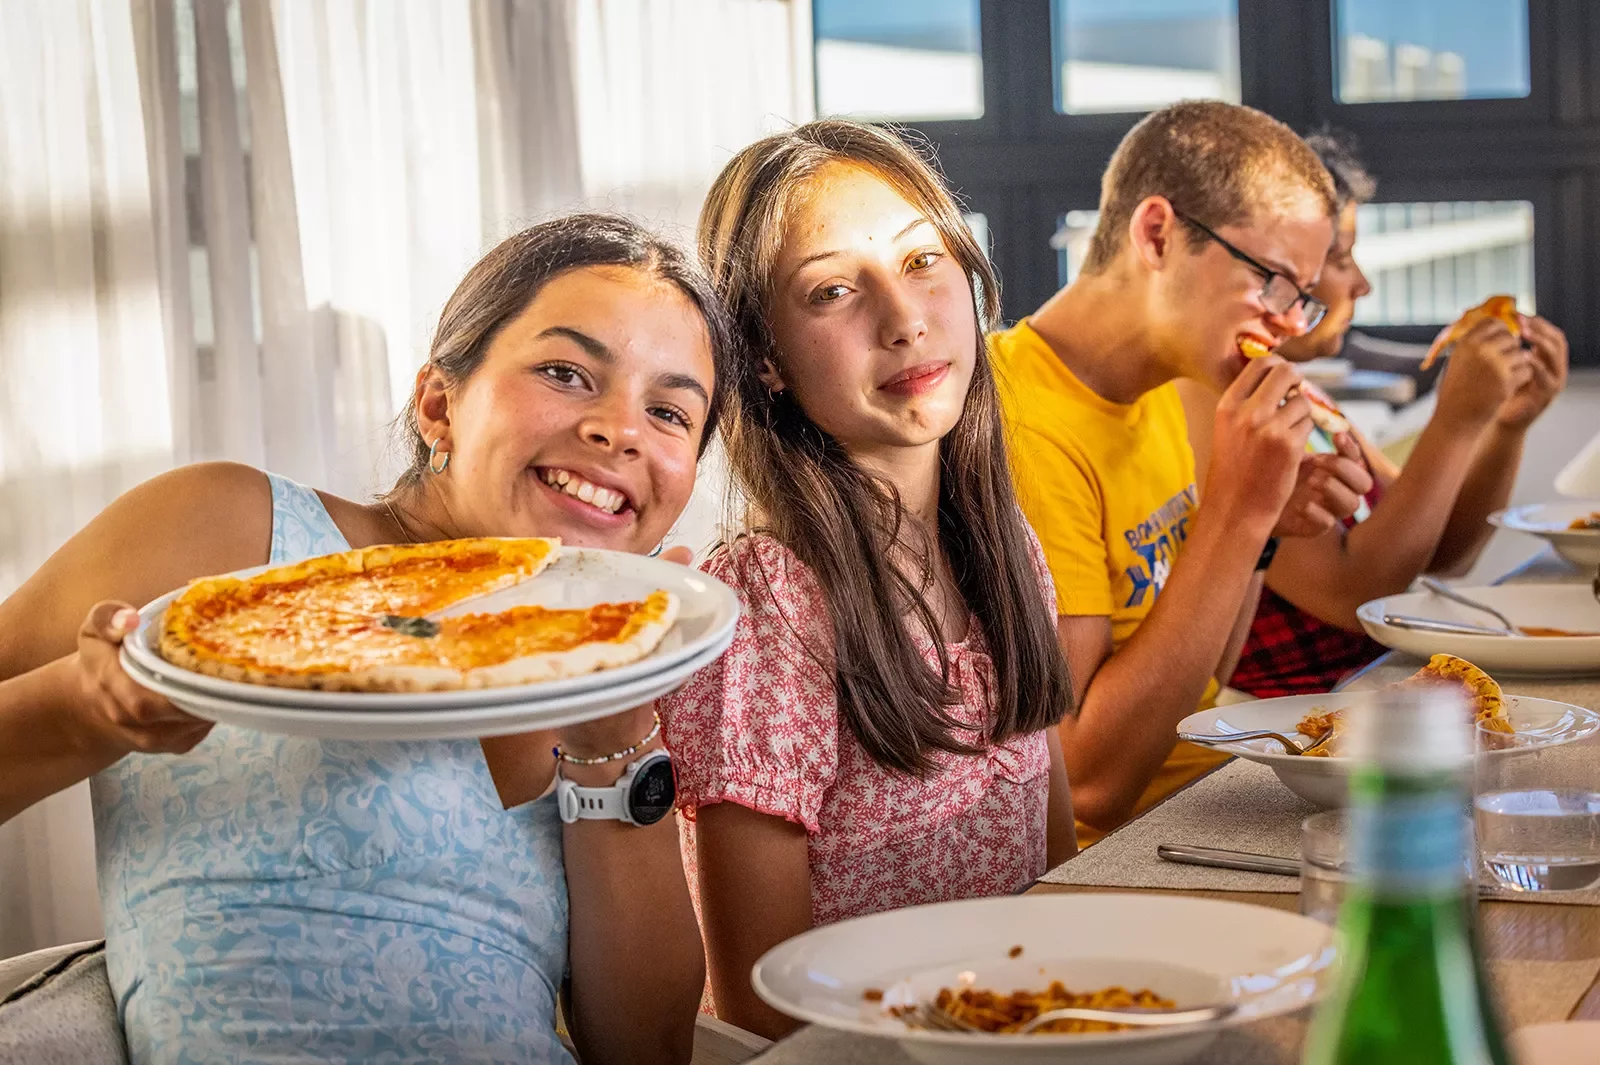 Teenagers eating handmade pizza in Portugal